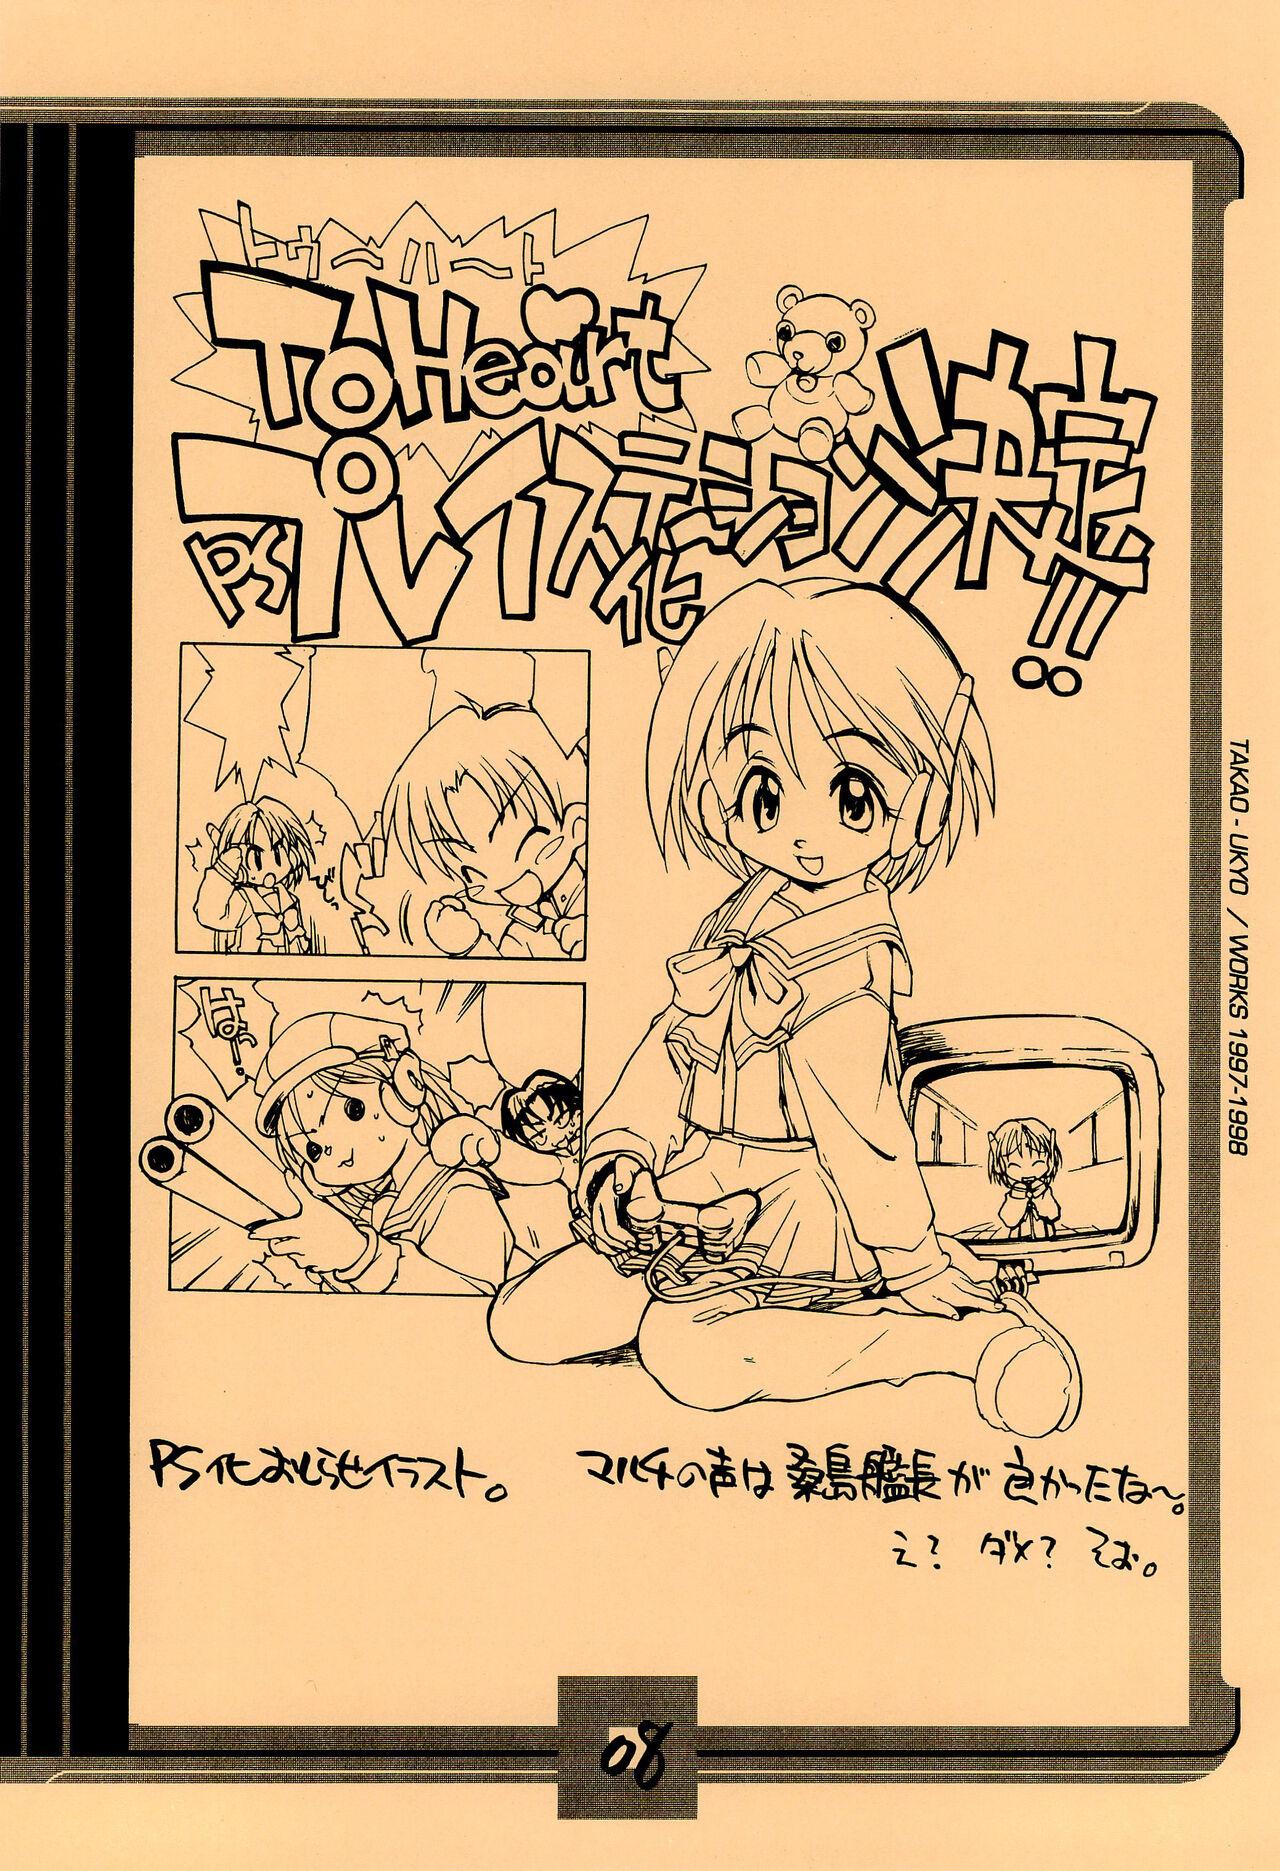 Novinhas Mamagult Katsudou Houkokusho Hikae 1997/11-1998/08 - To heart Fun fun pharmacy 10 carat torte 19yo - Page 8